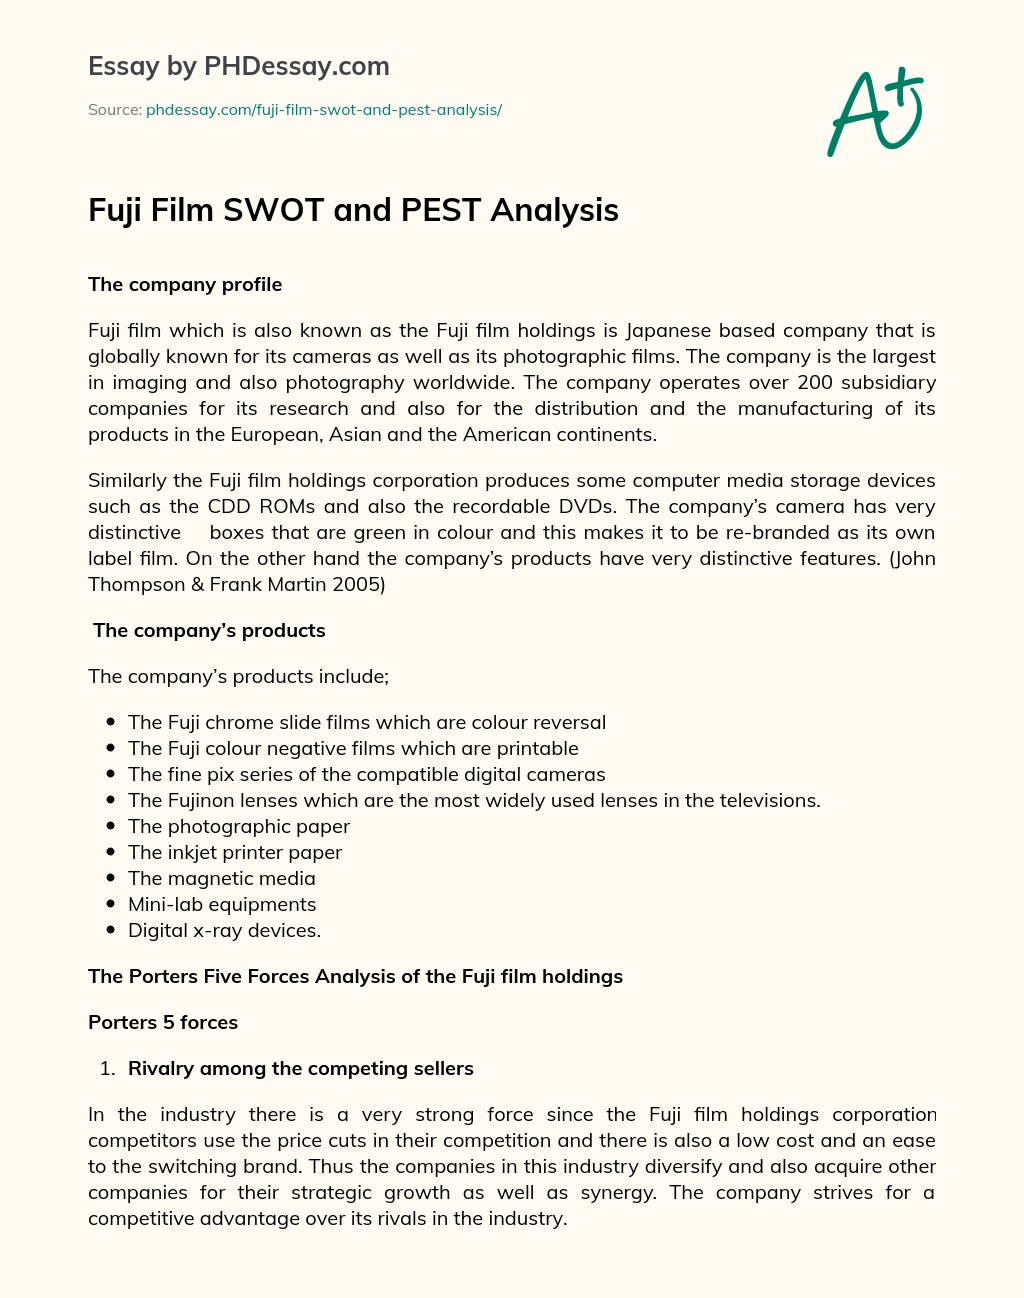 Fuji Film SWOT and PEST Analysis essay